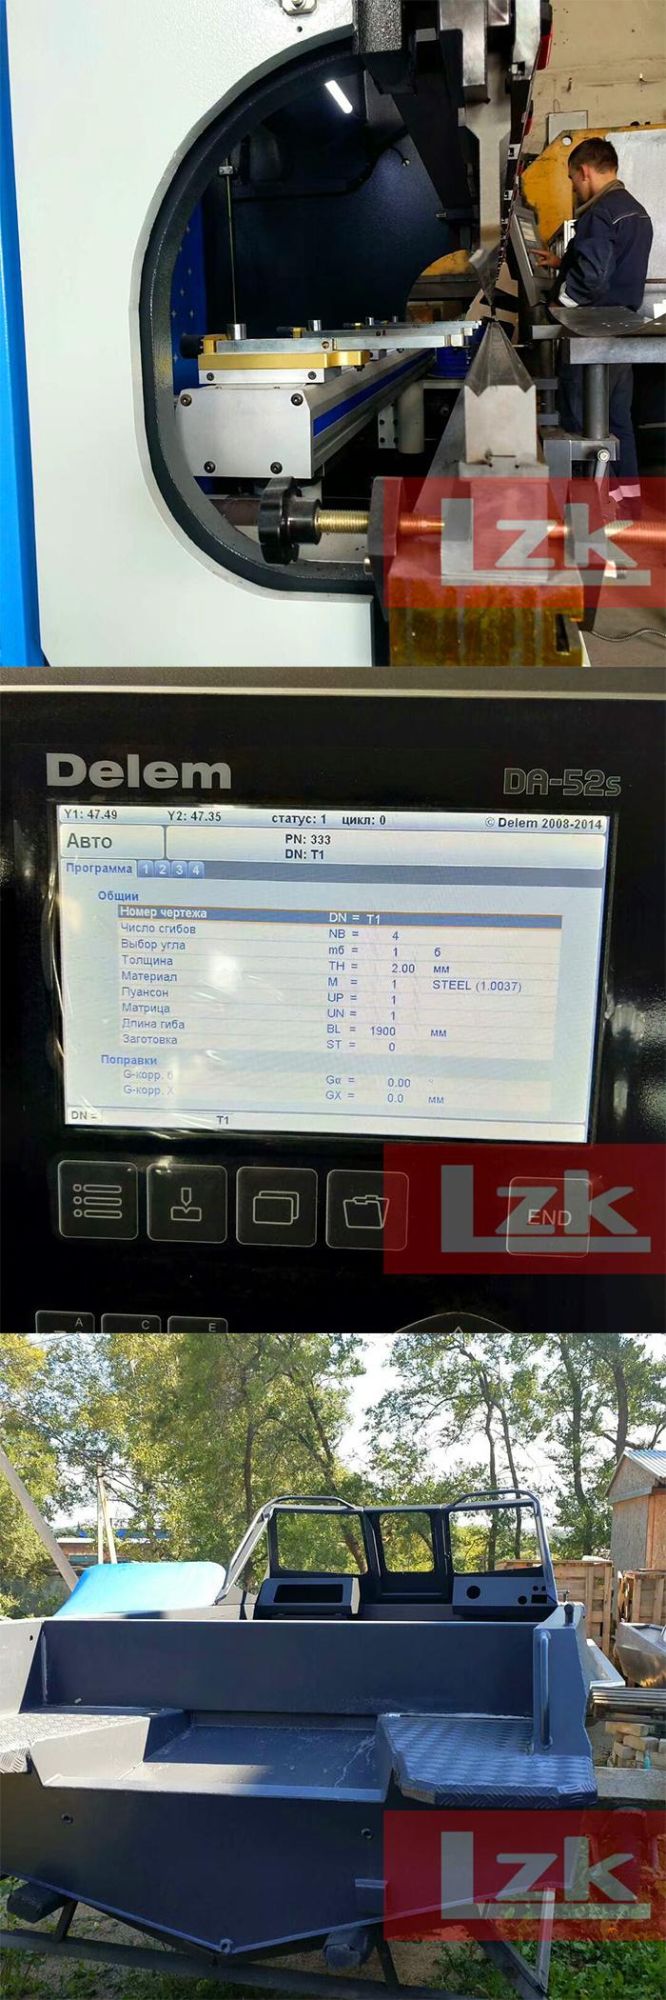 Delem Da58t CNC Press Brake Machine with 4 Axes